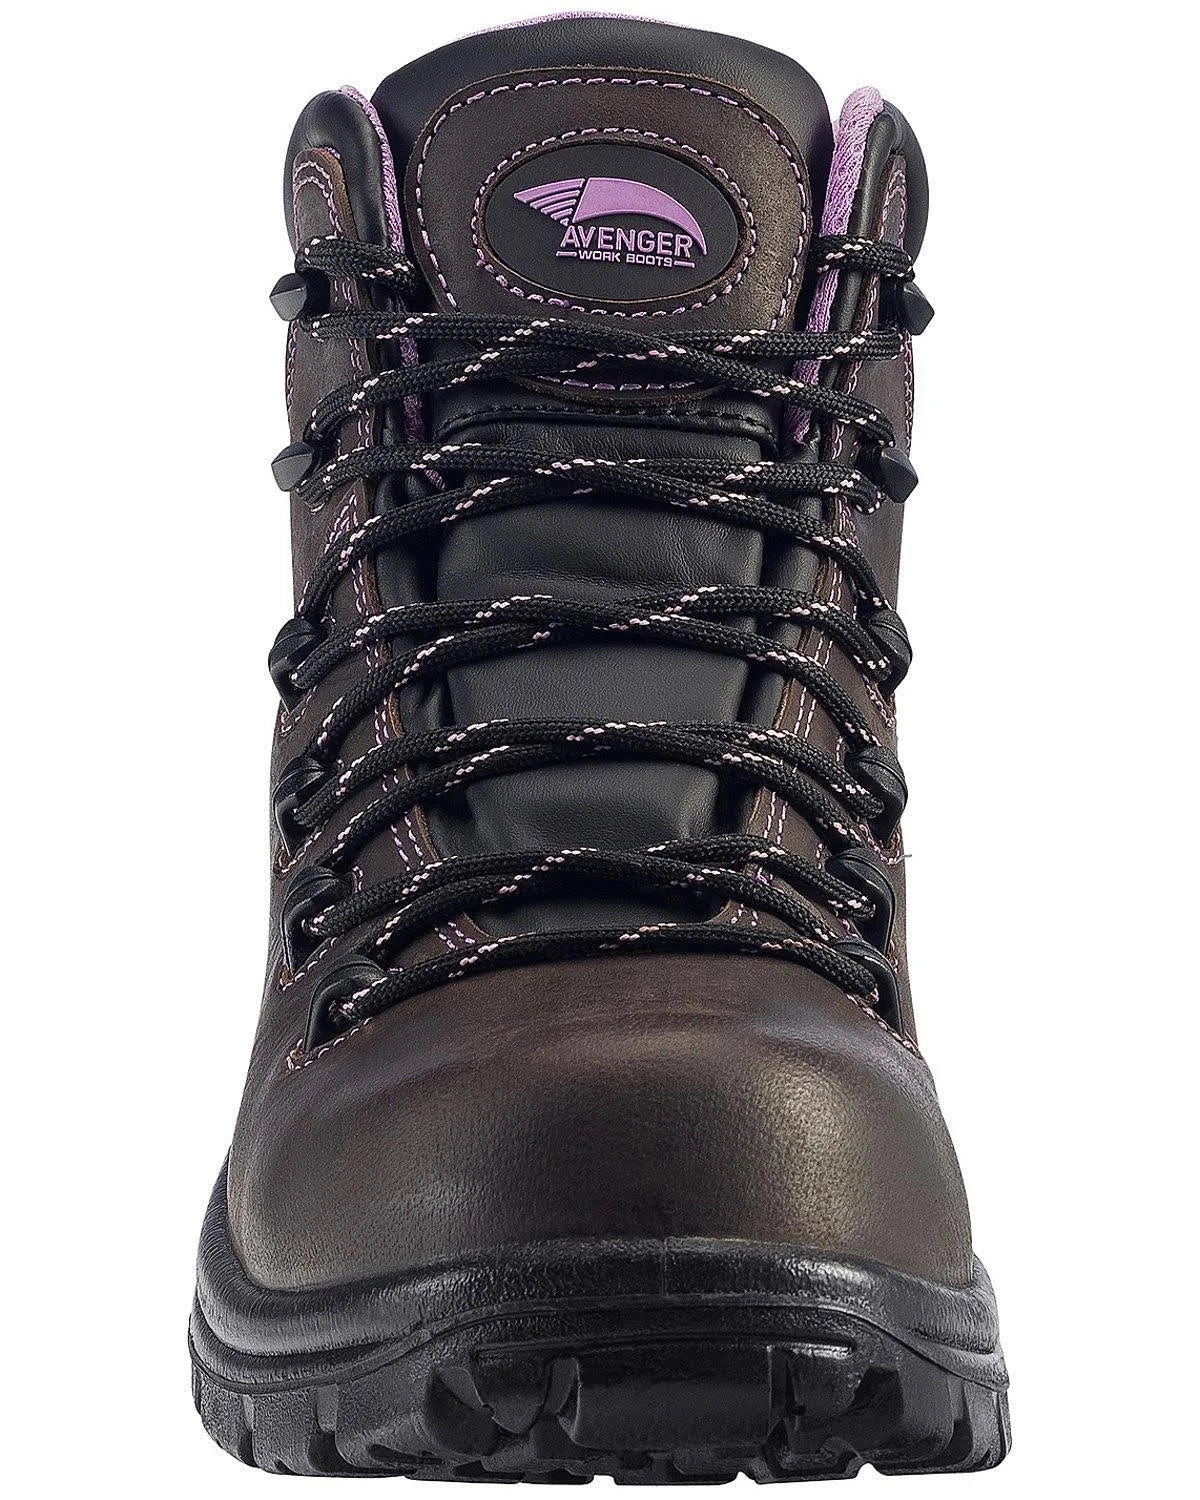 A7126 Avenger Composite Toe Waterproof Hiker Boots